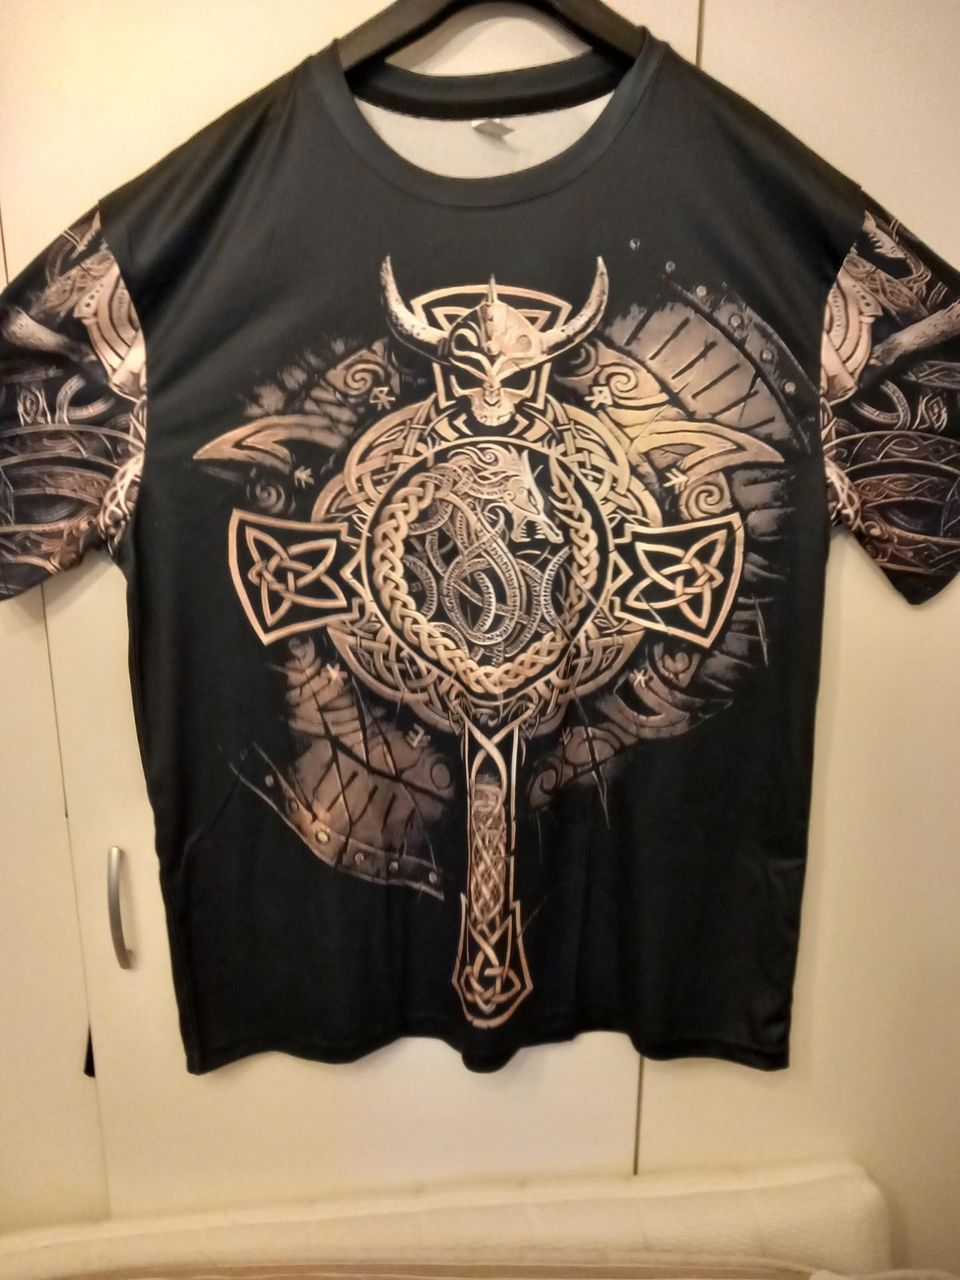 Musta viikingiaiheinen paita.